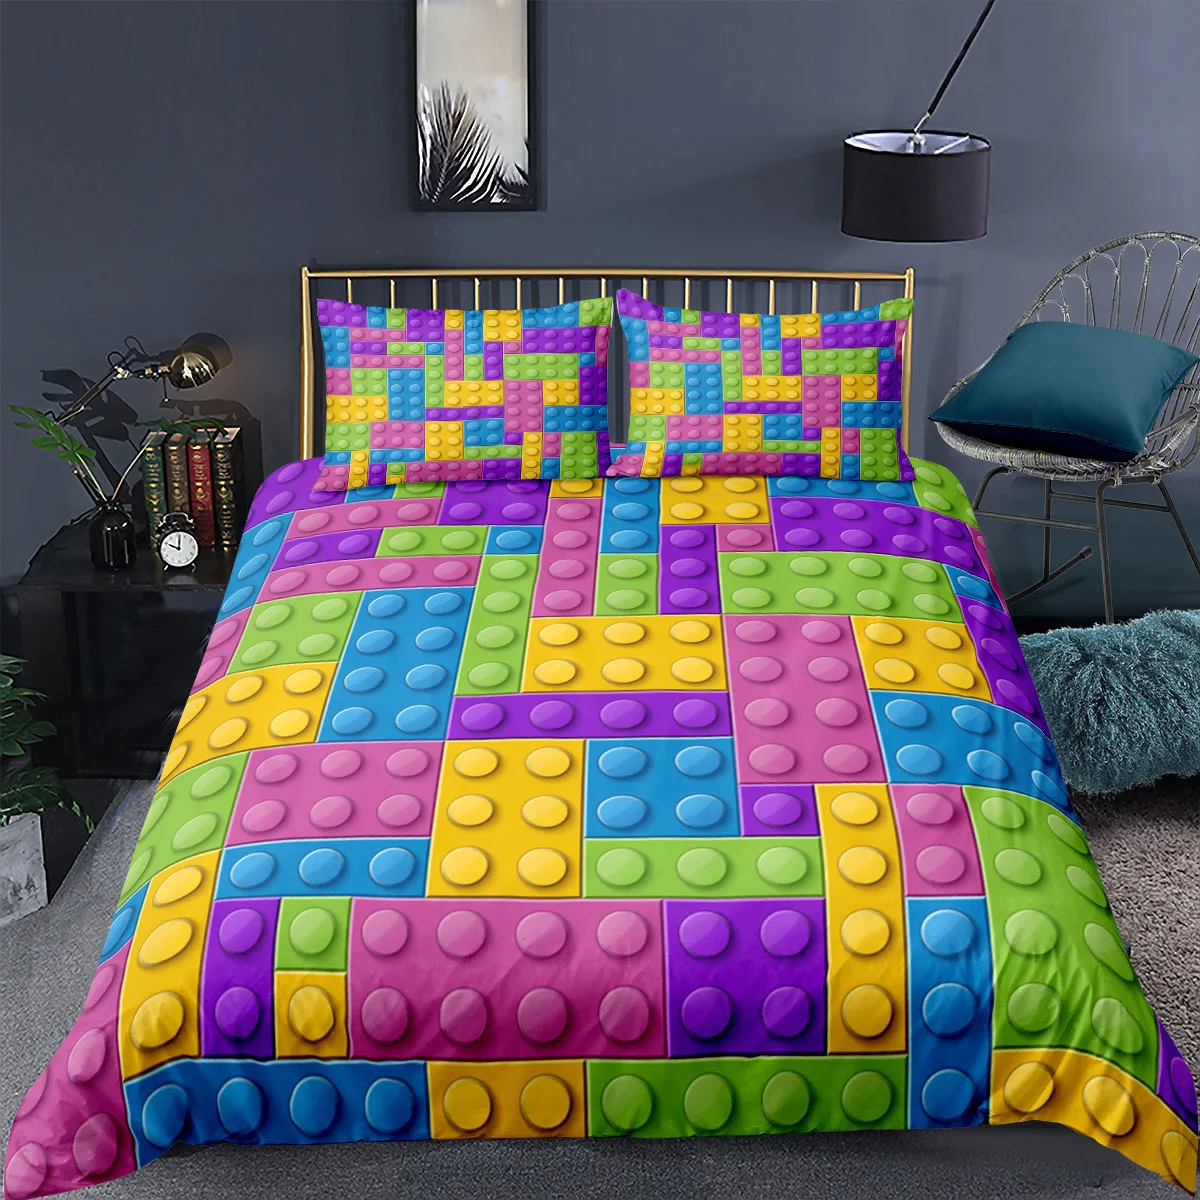 Kids Building Blocks Bedding Set Fashoin 3D Print Comforter Luxury Queen King Single Duvet Cover Set Home Textile Decor Modern